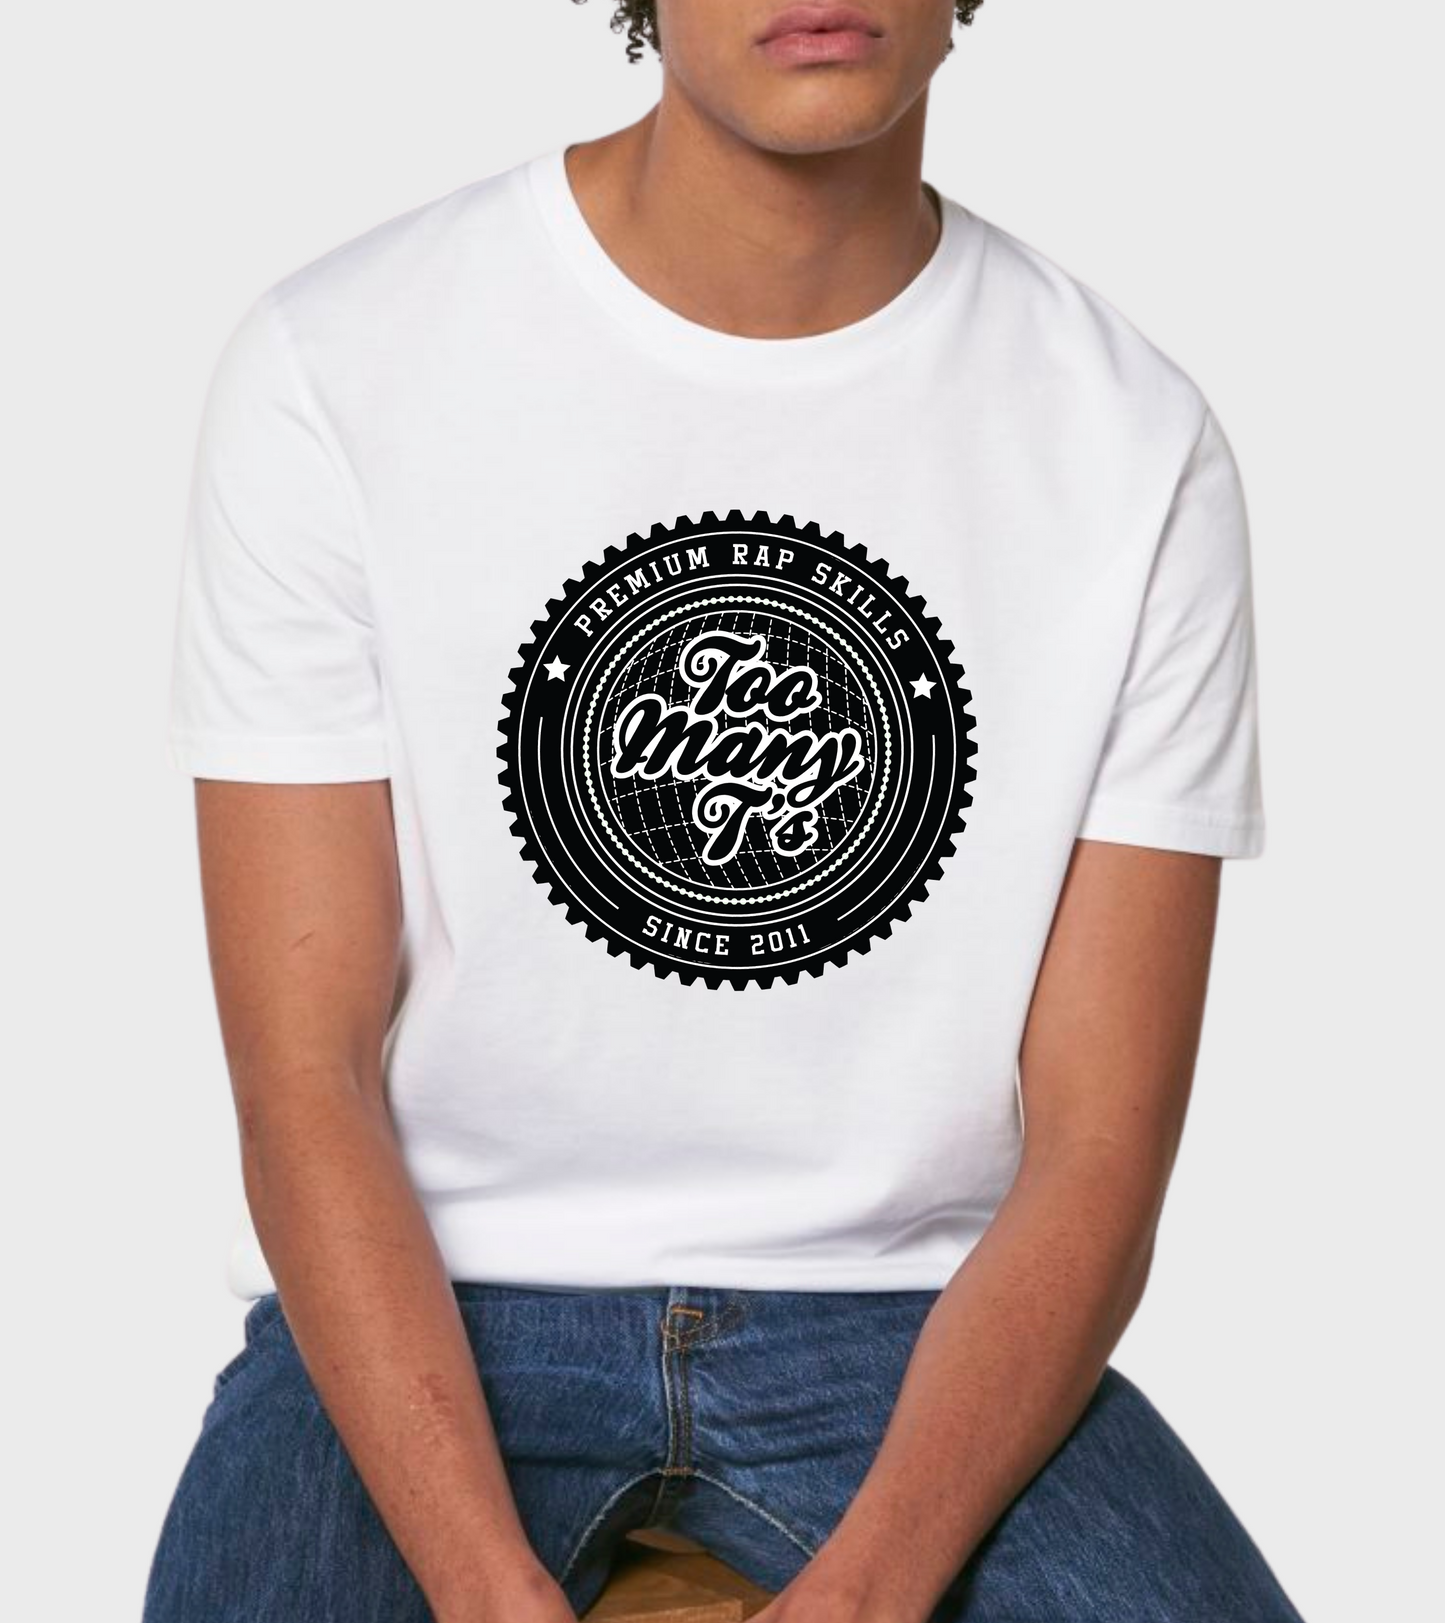 White regular fit t-shirt with black premium rap skills design.